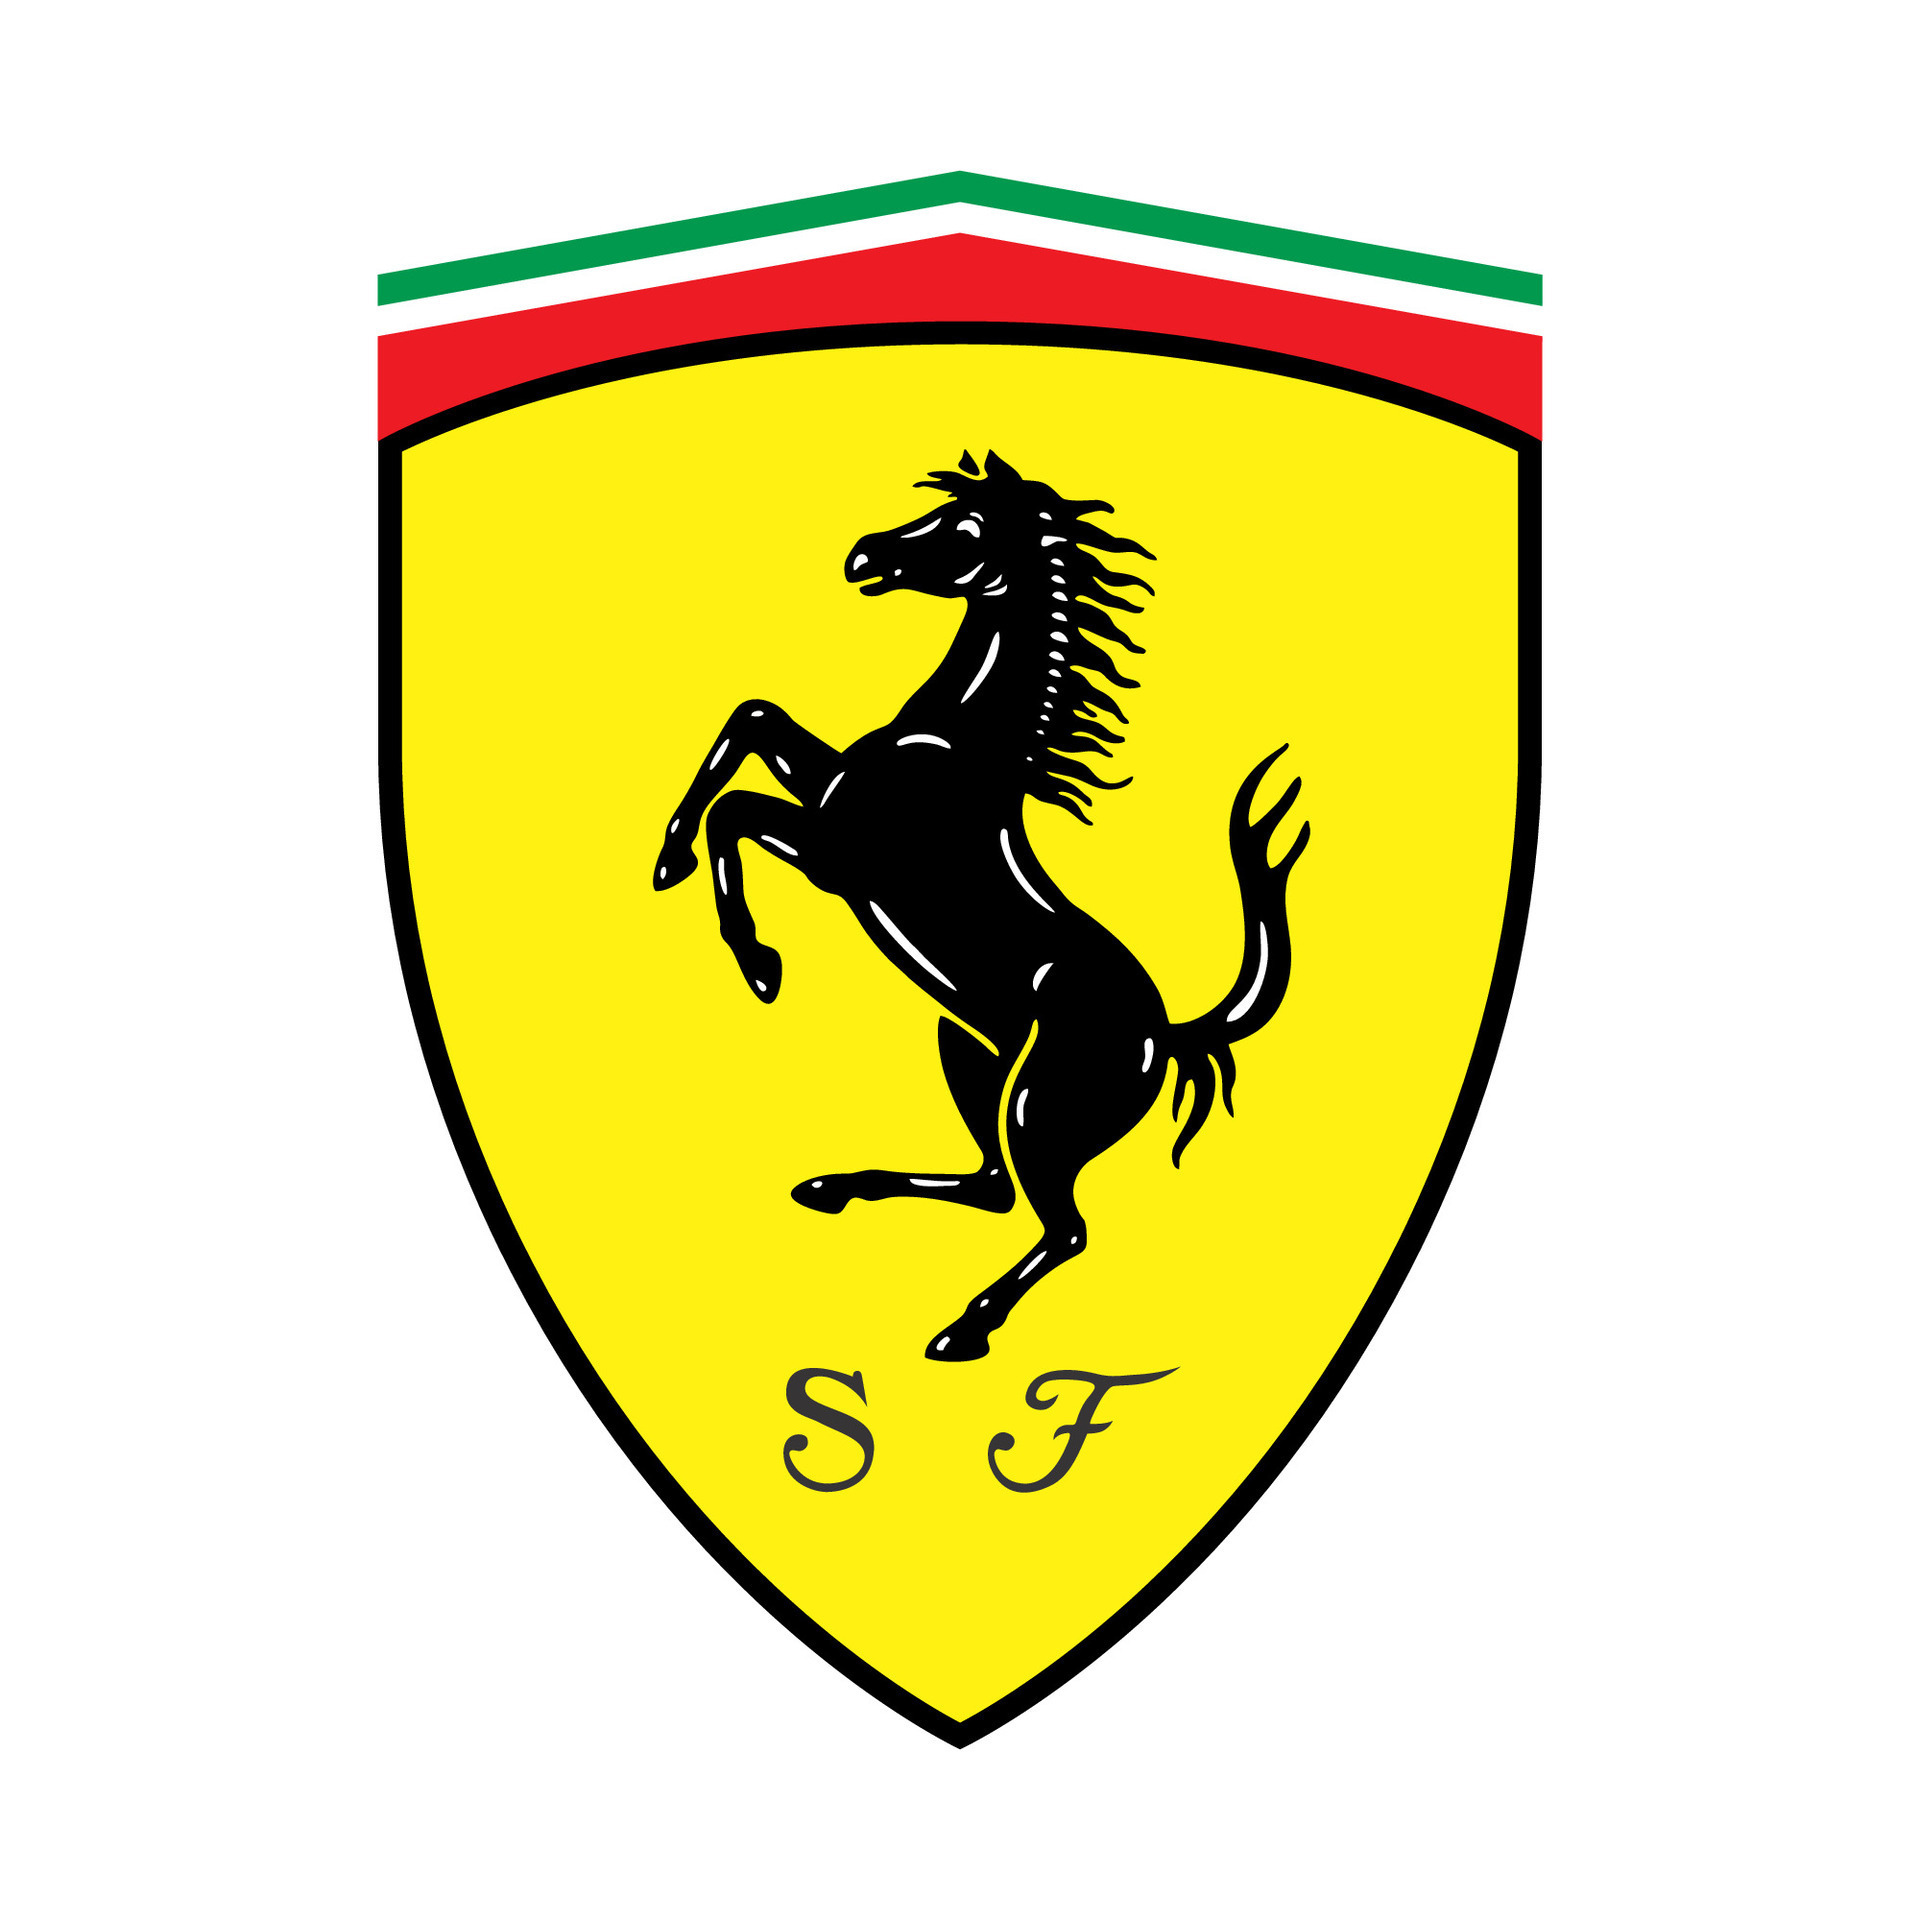 Scuderia Ferrari logo editorial illustration on white background ...